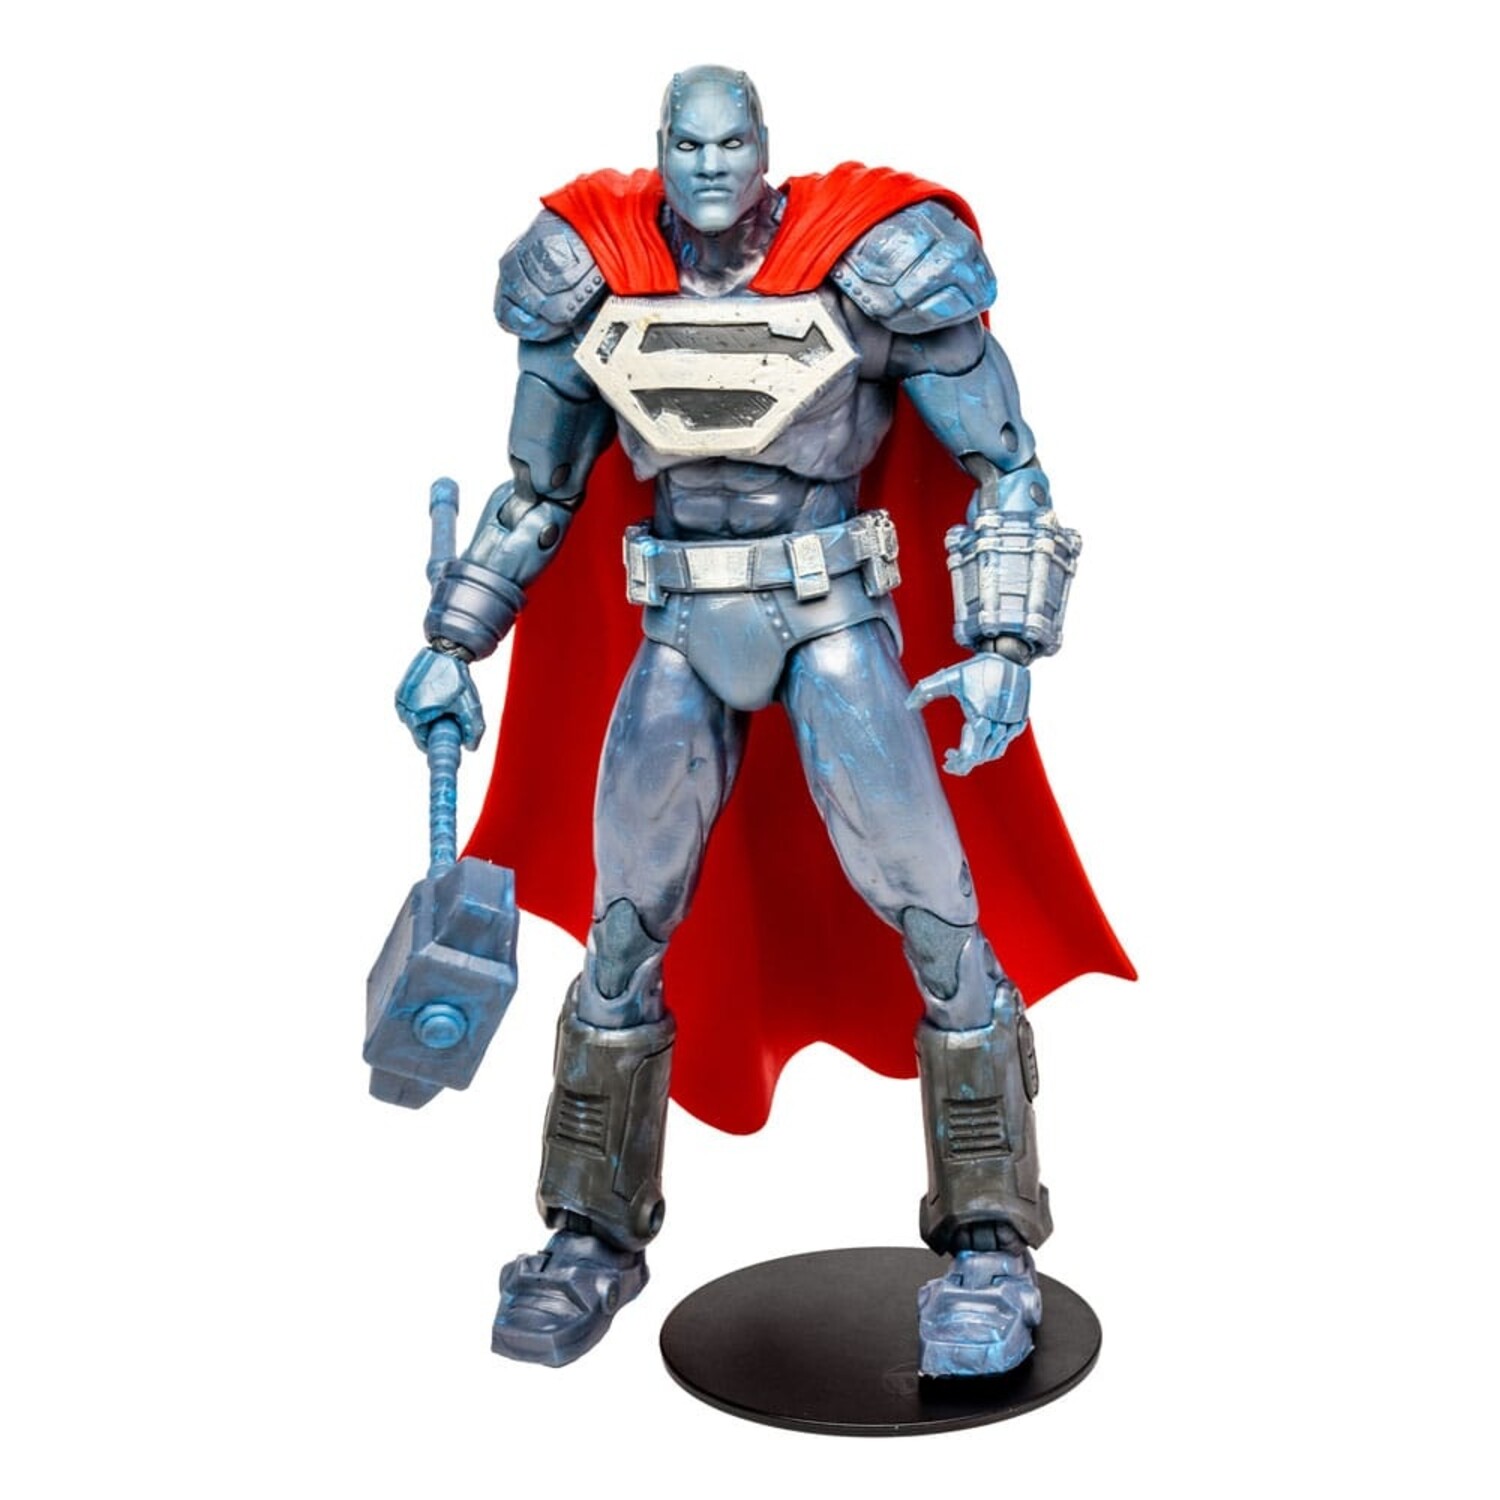 Superman vs The Flash DC Battle Resin Statue - McFarlane Toys Store